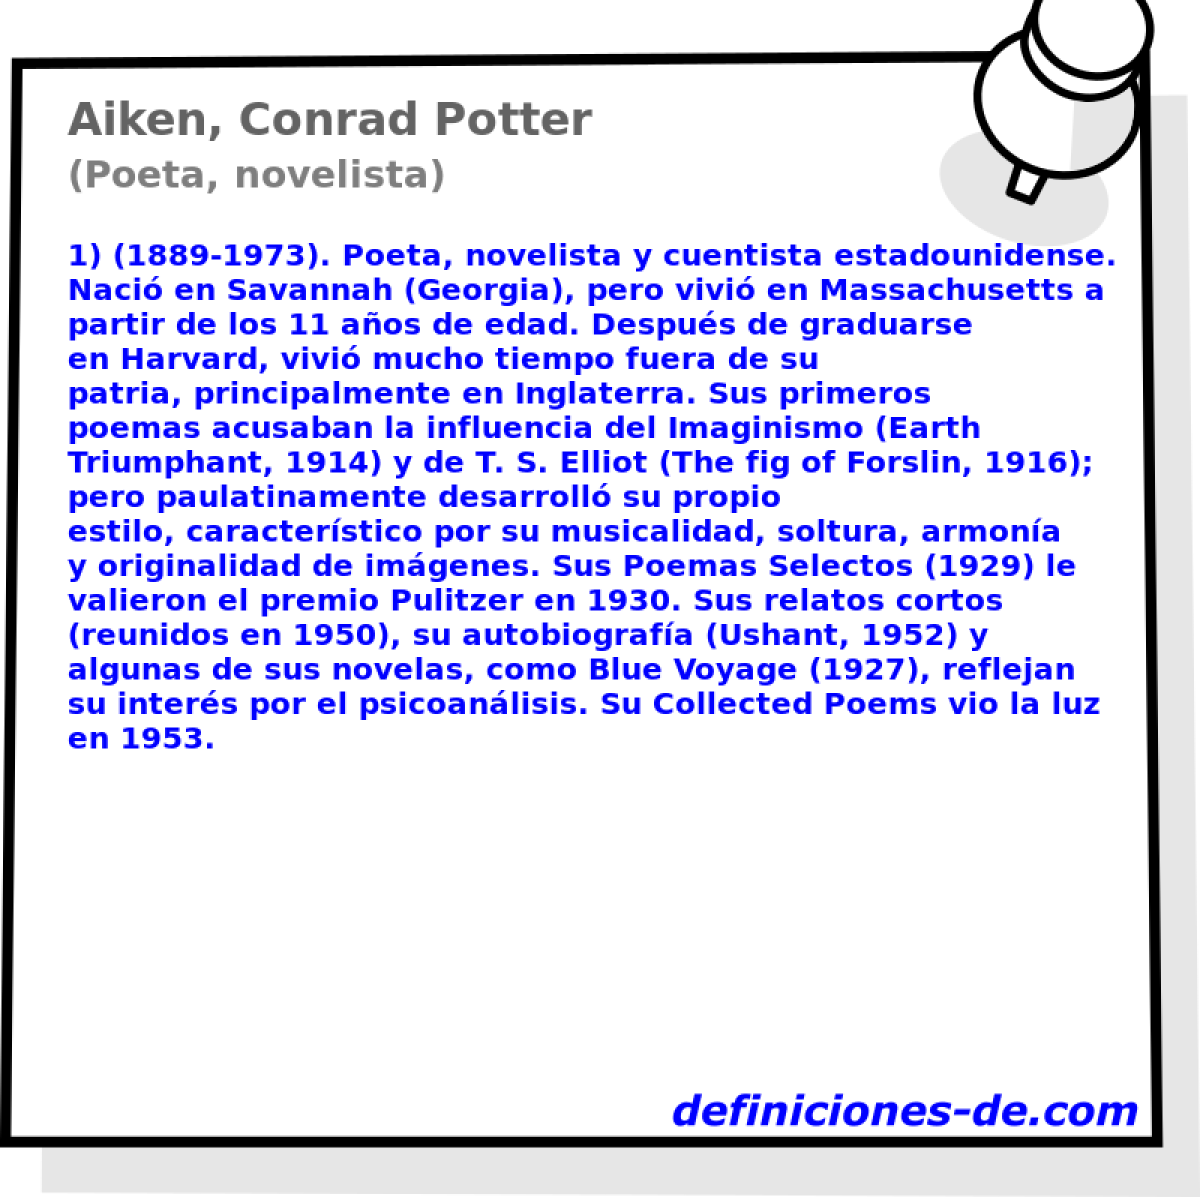 Aiken, Conrad Potter (Poeta, novelista)